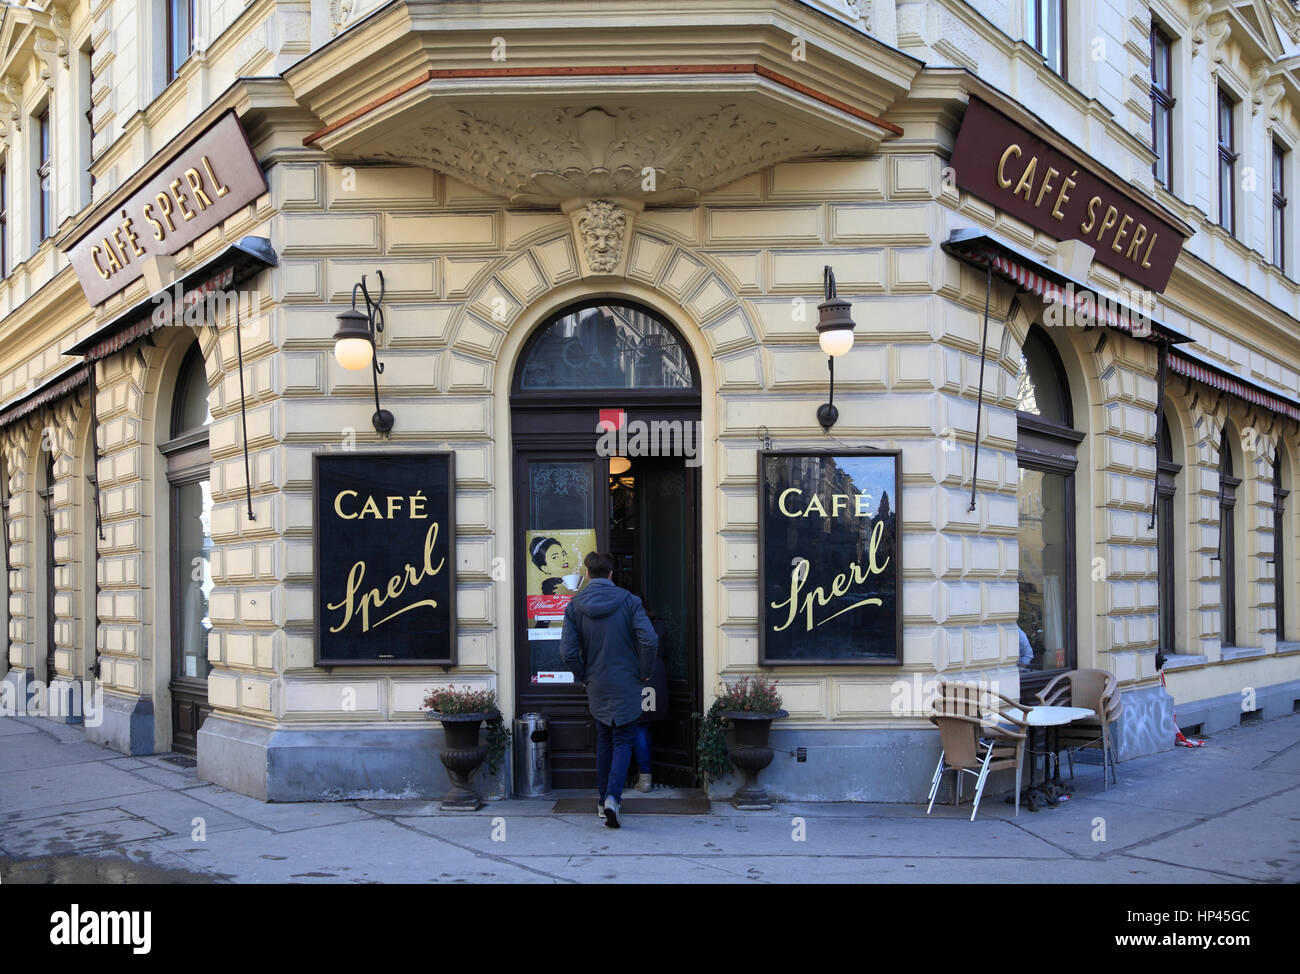 Cafe SPERL, Vienna, Austria, Europe Stock Photo